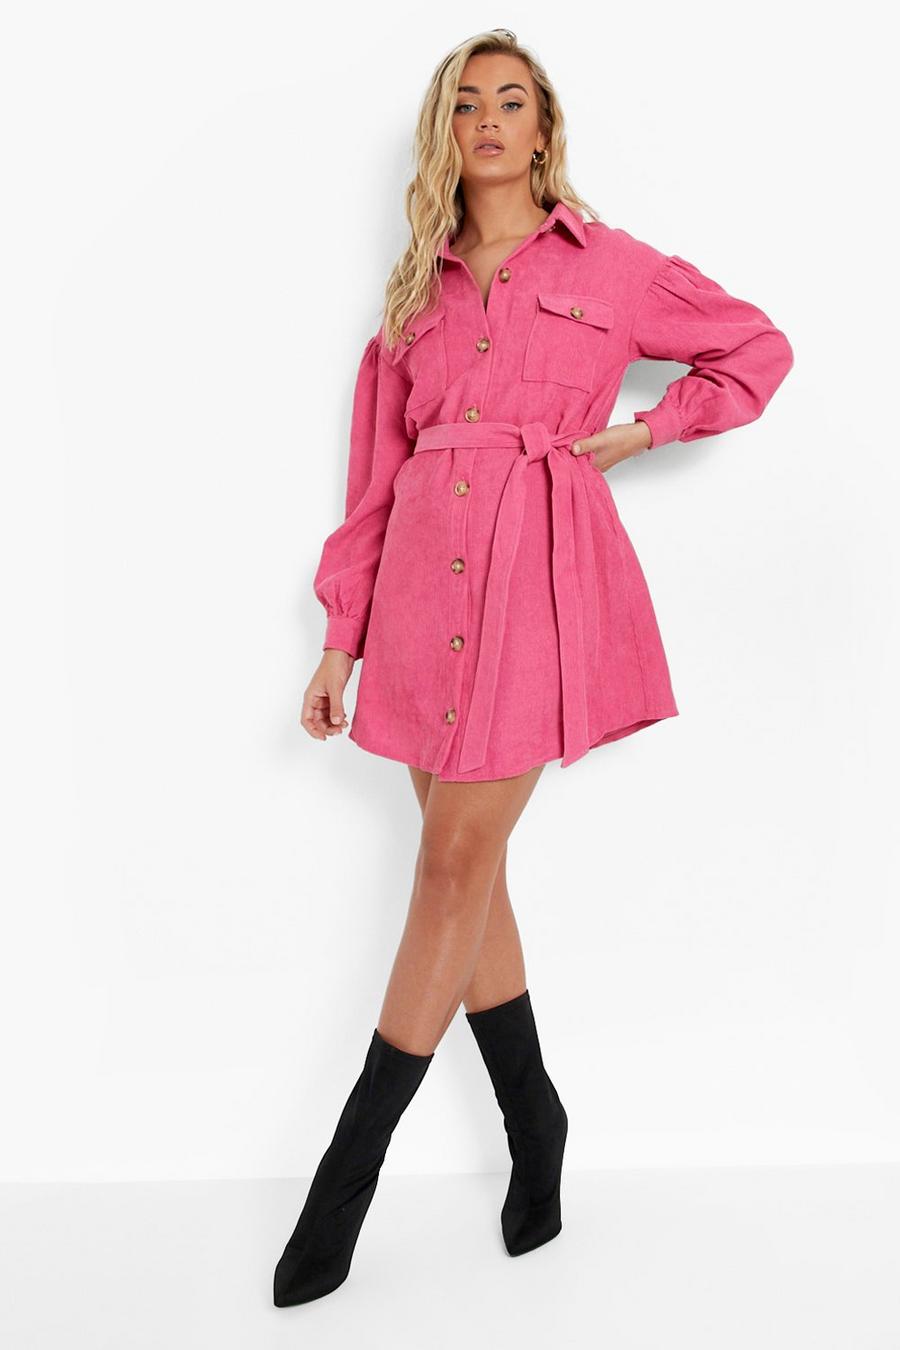 Langärmliges Cord Hemd-Kleid mit Gürtel, Hot pink rosa